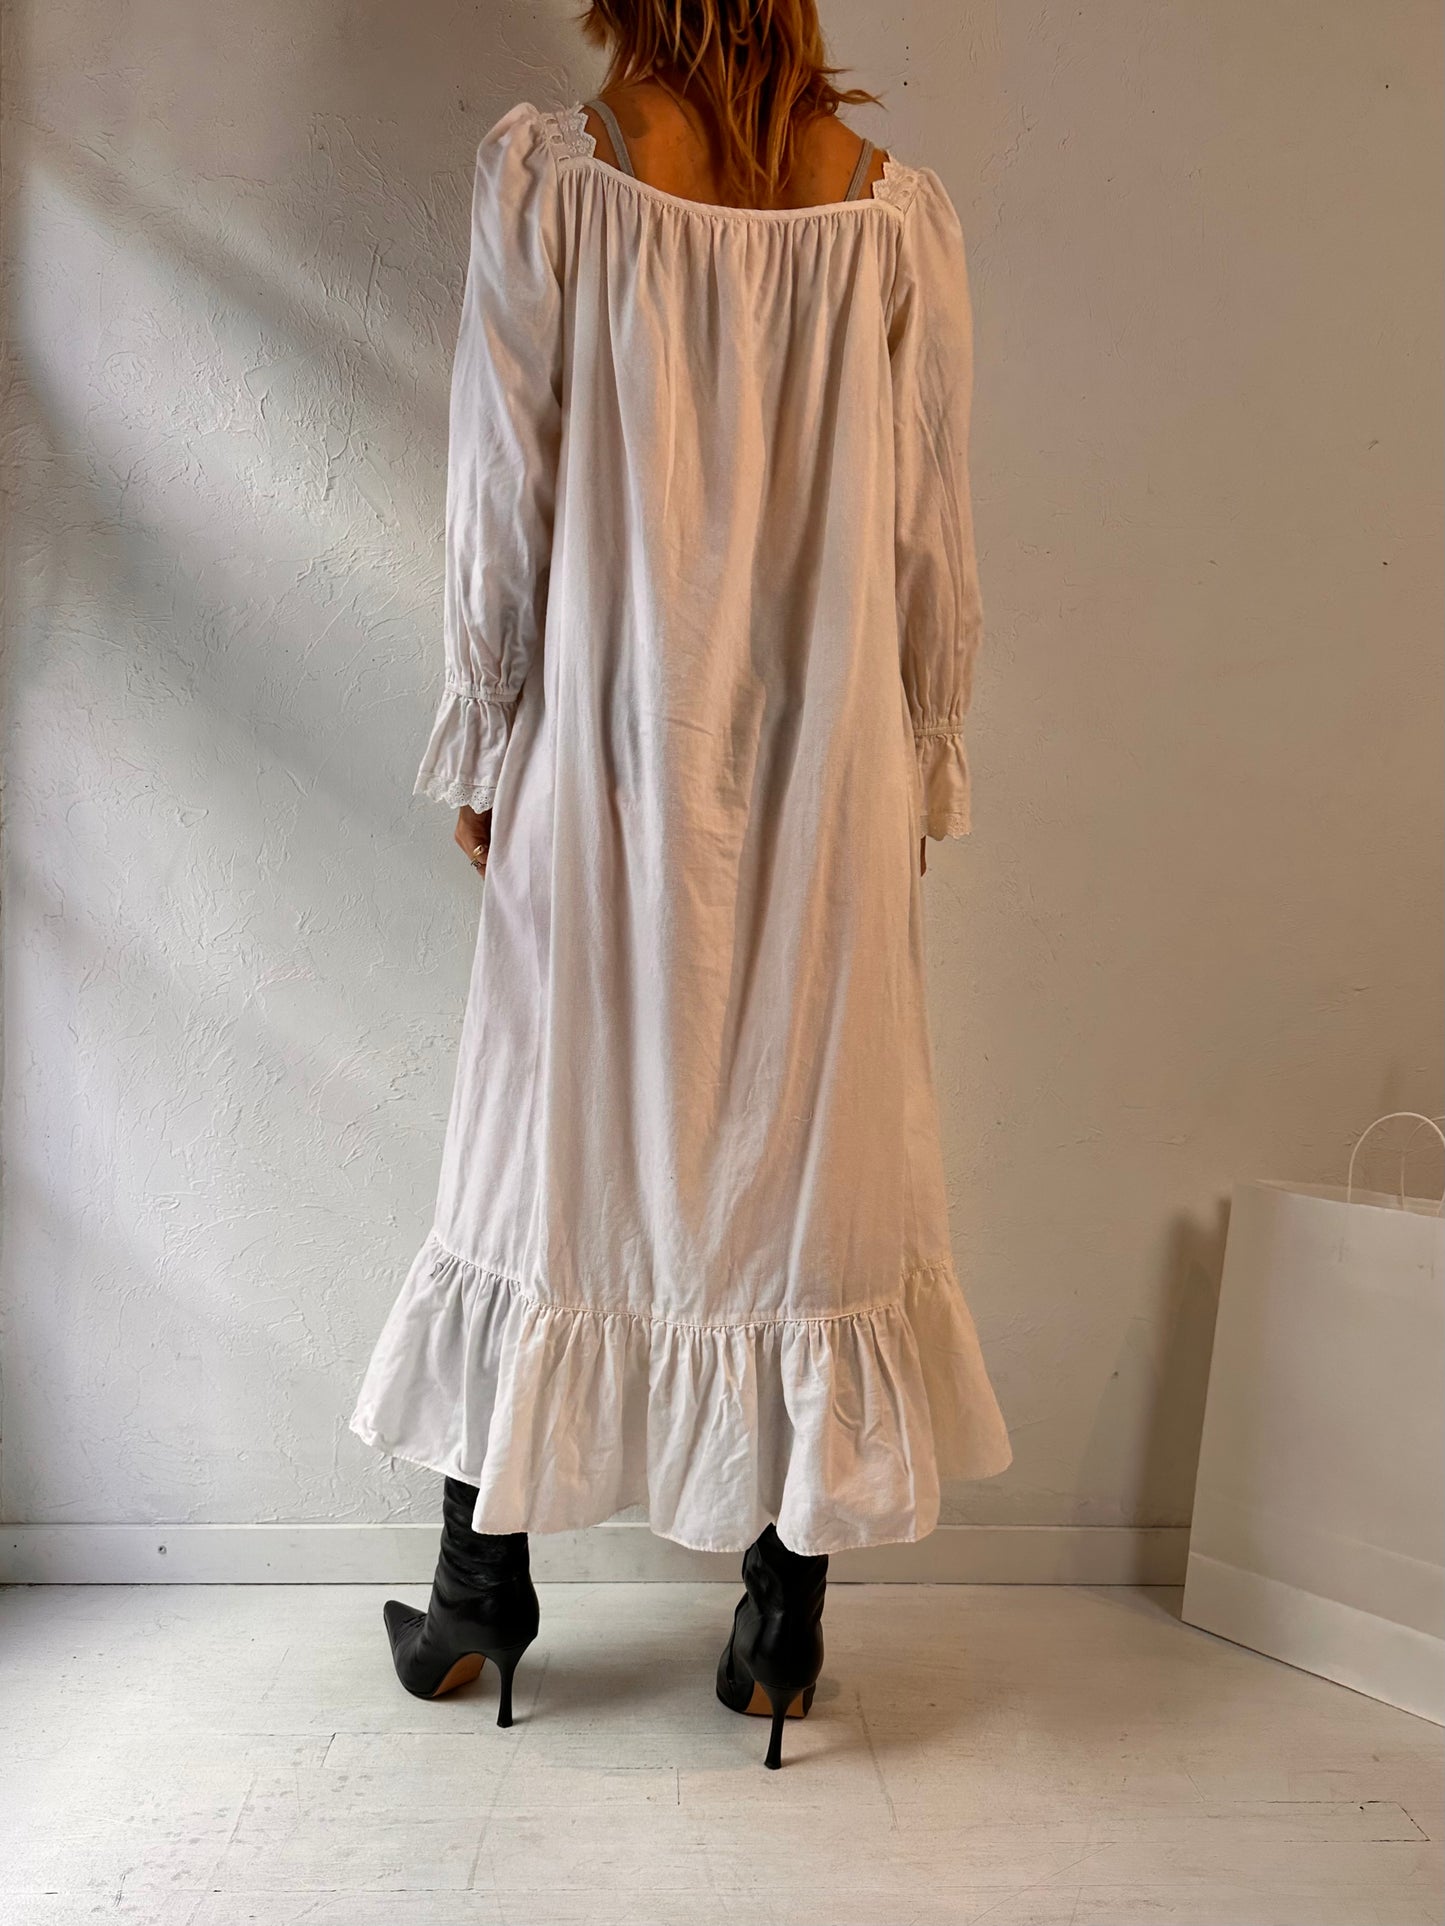 Y2k 'Victoria Secret' White Long Sleeve Cotton Dress / Small